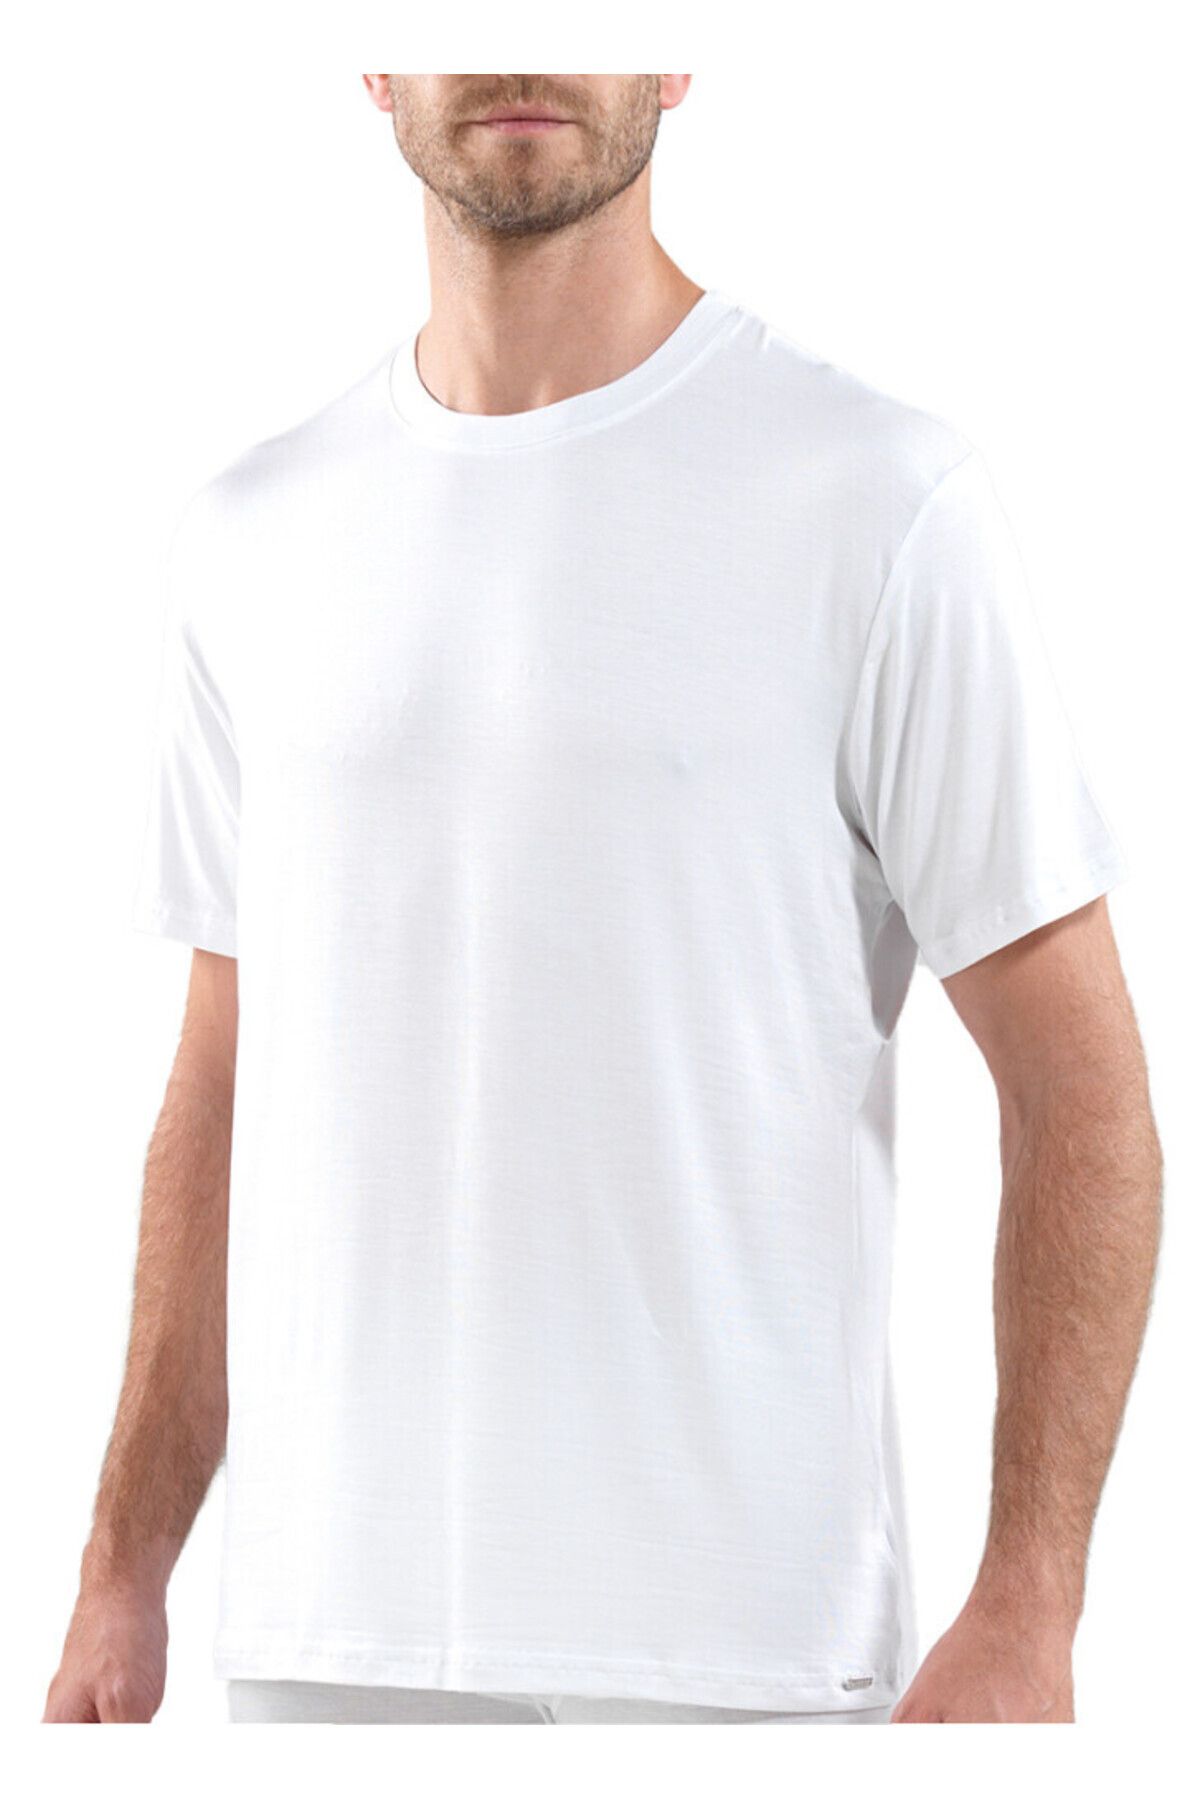 Blackspade Blakspade Erkek Silver T-shirt-9306-beyaz